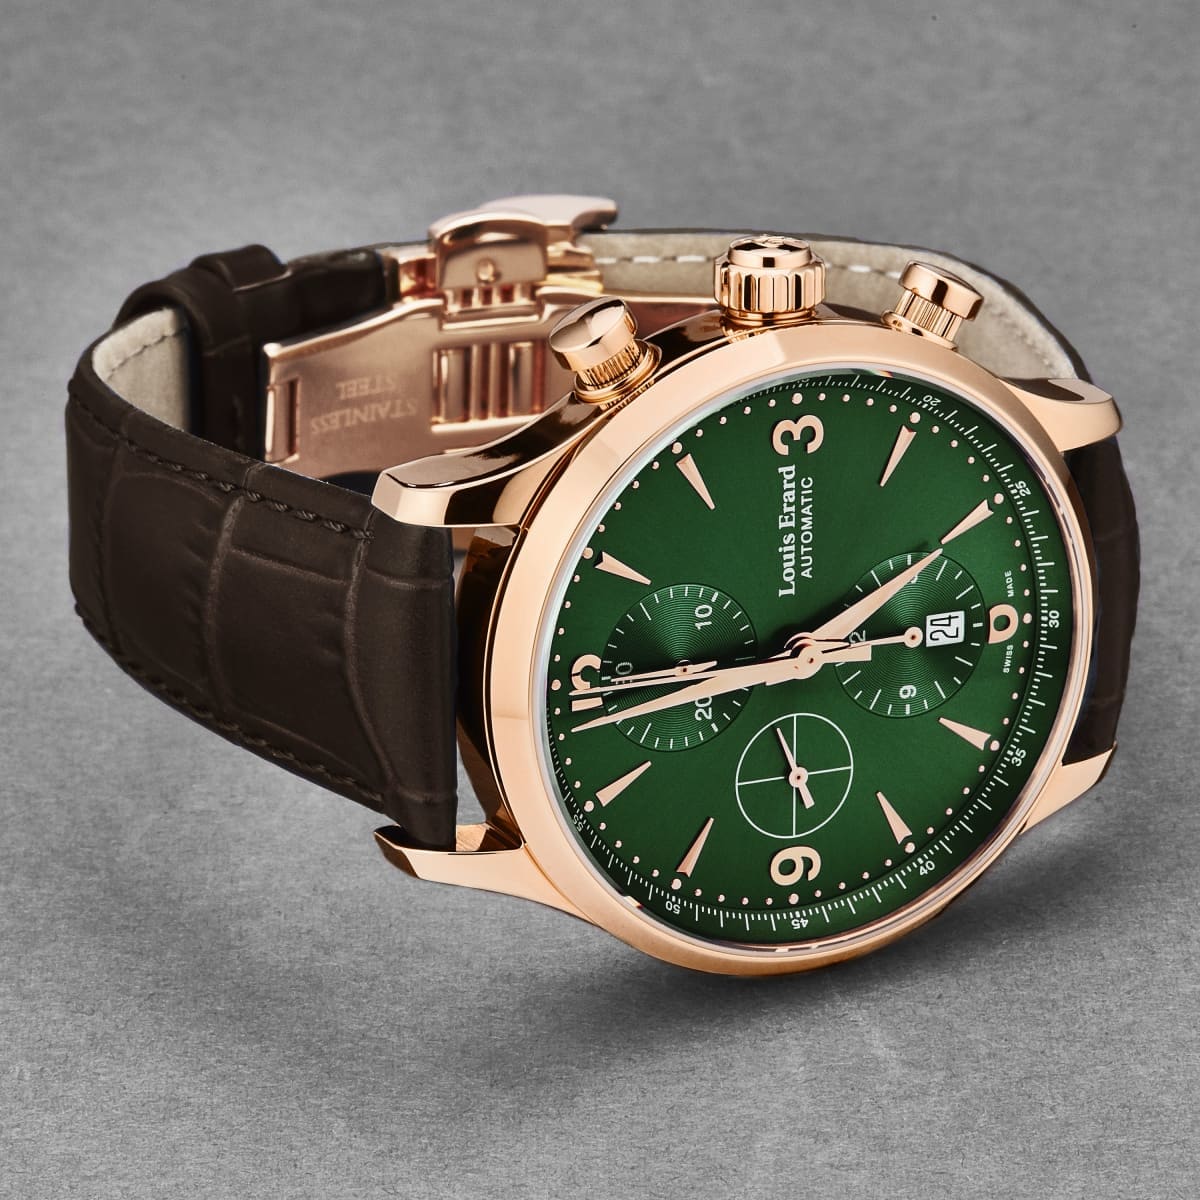 Louis Erard Men’s ’1931’ Chronograph Green Dial Brown Leather Strap Automatic Watch 78225PR19.BRC03 - On sale